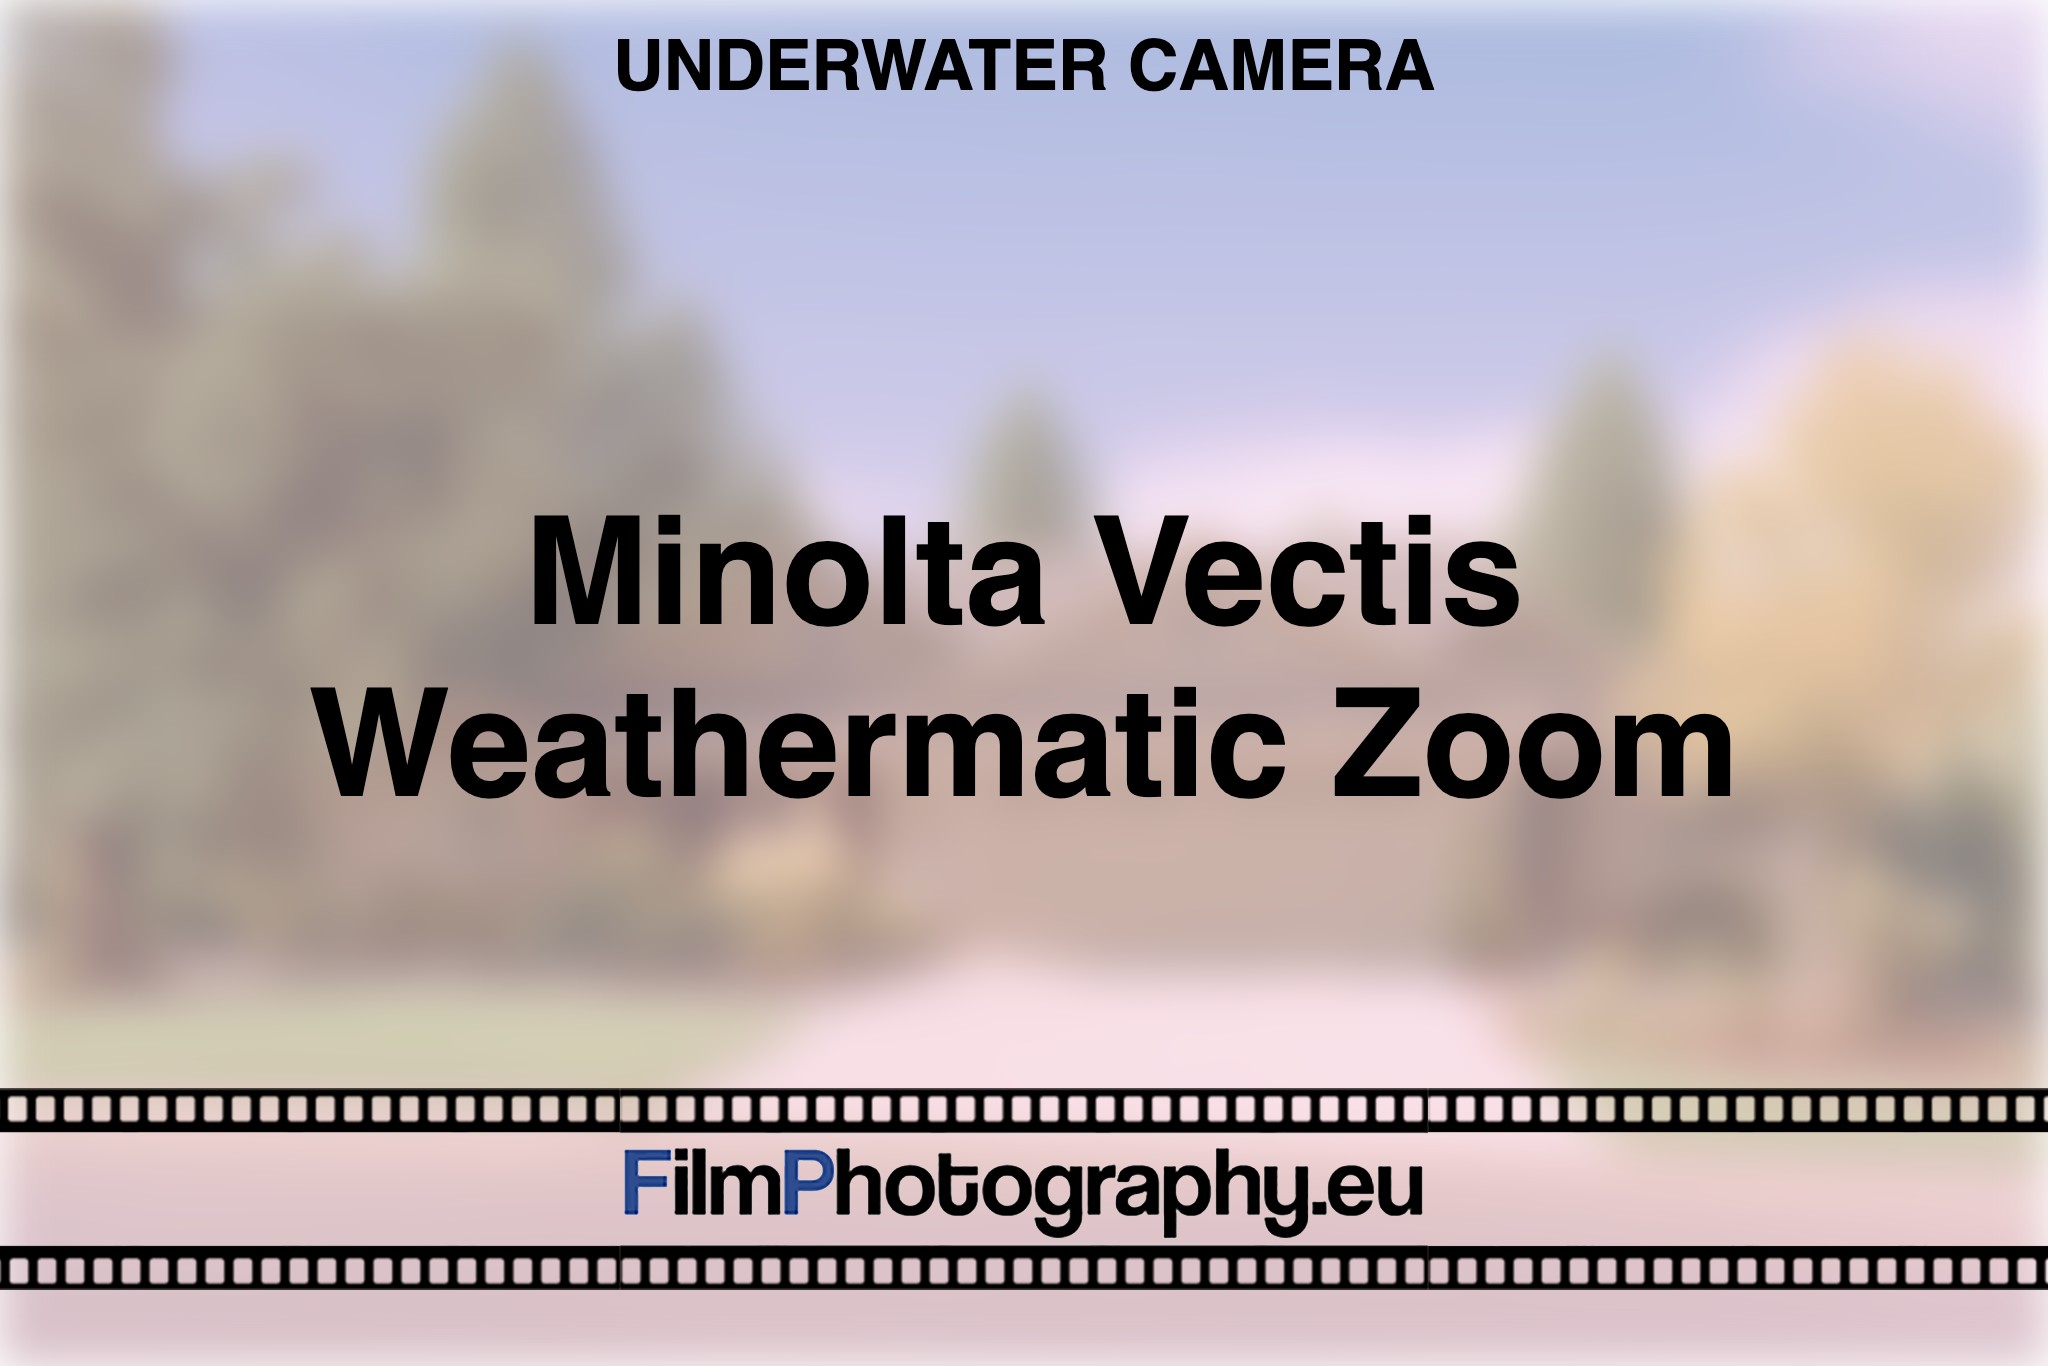 minolta-vectis-weathermatic-zoom-underwater-camera-bnv